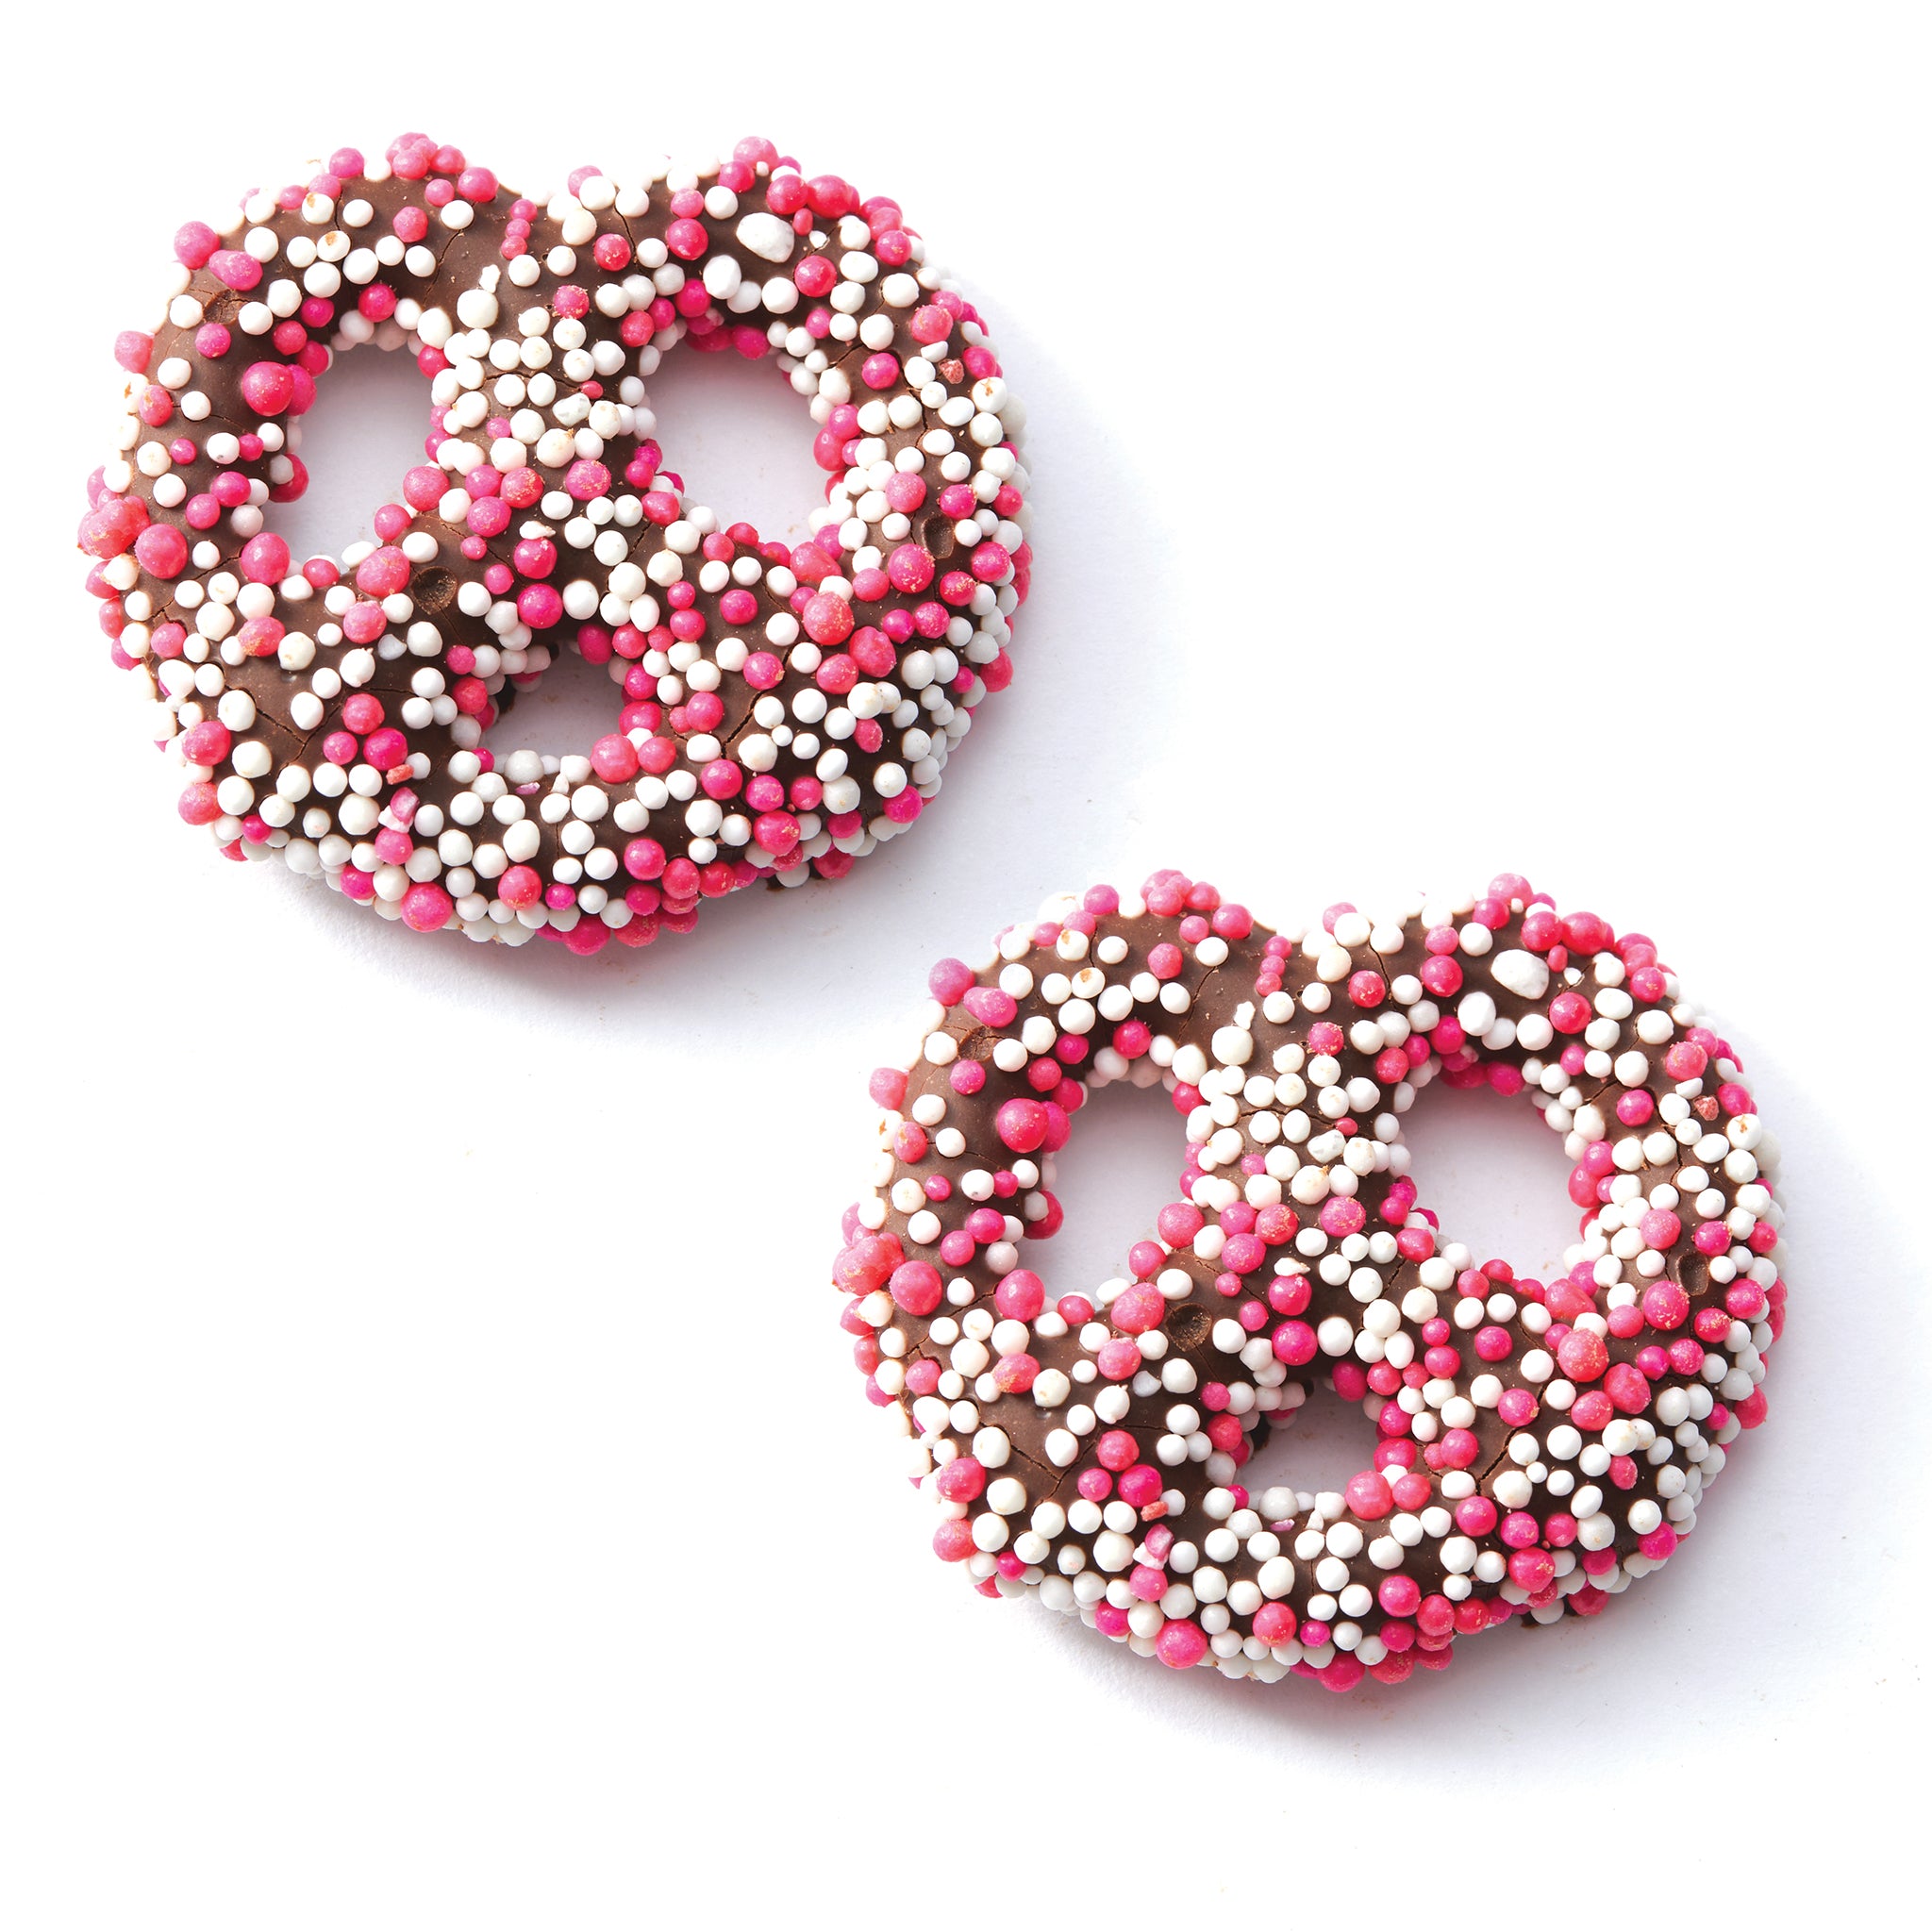 Mini Chocolate Pretzel - Pink Seeds